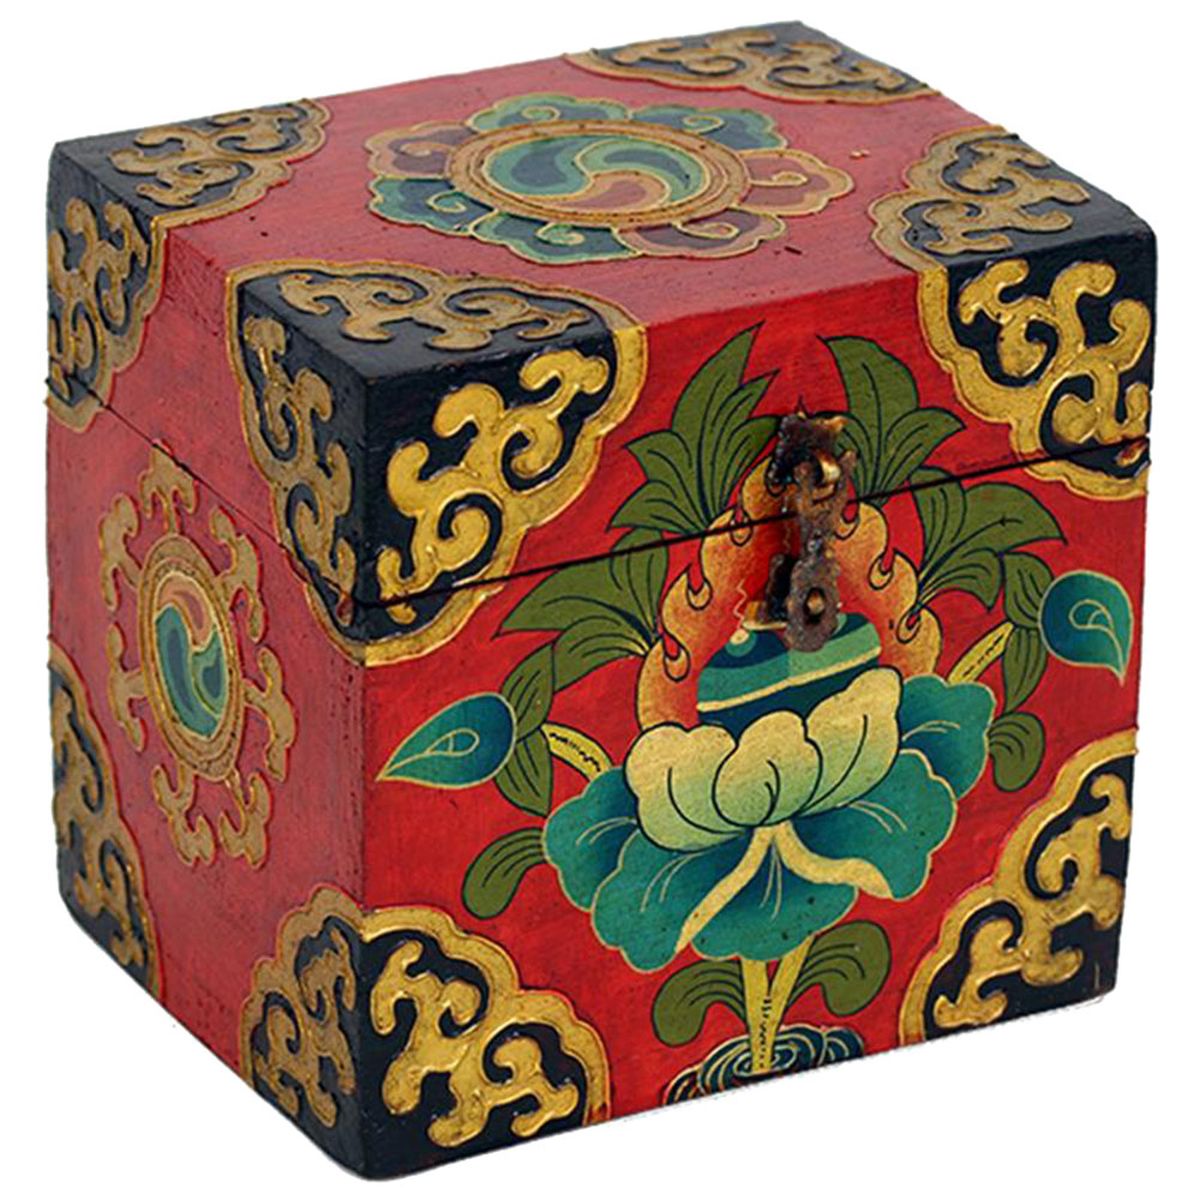 Treasure box Tibetan